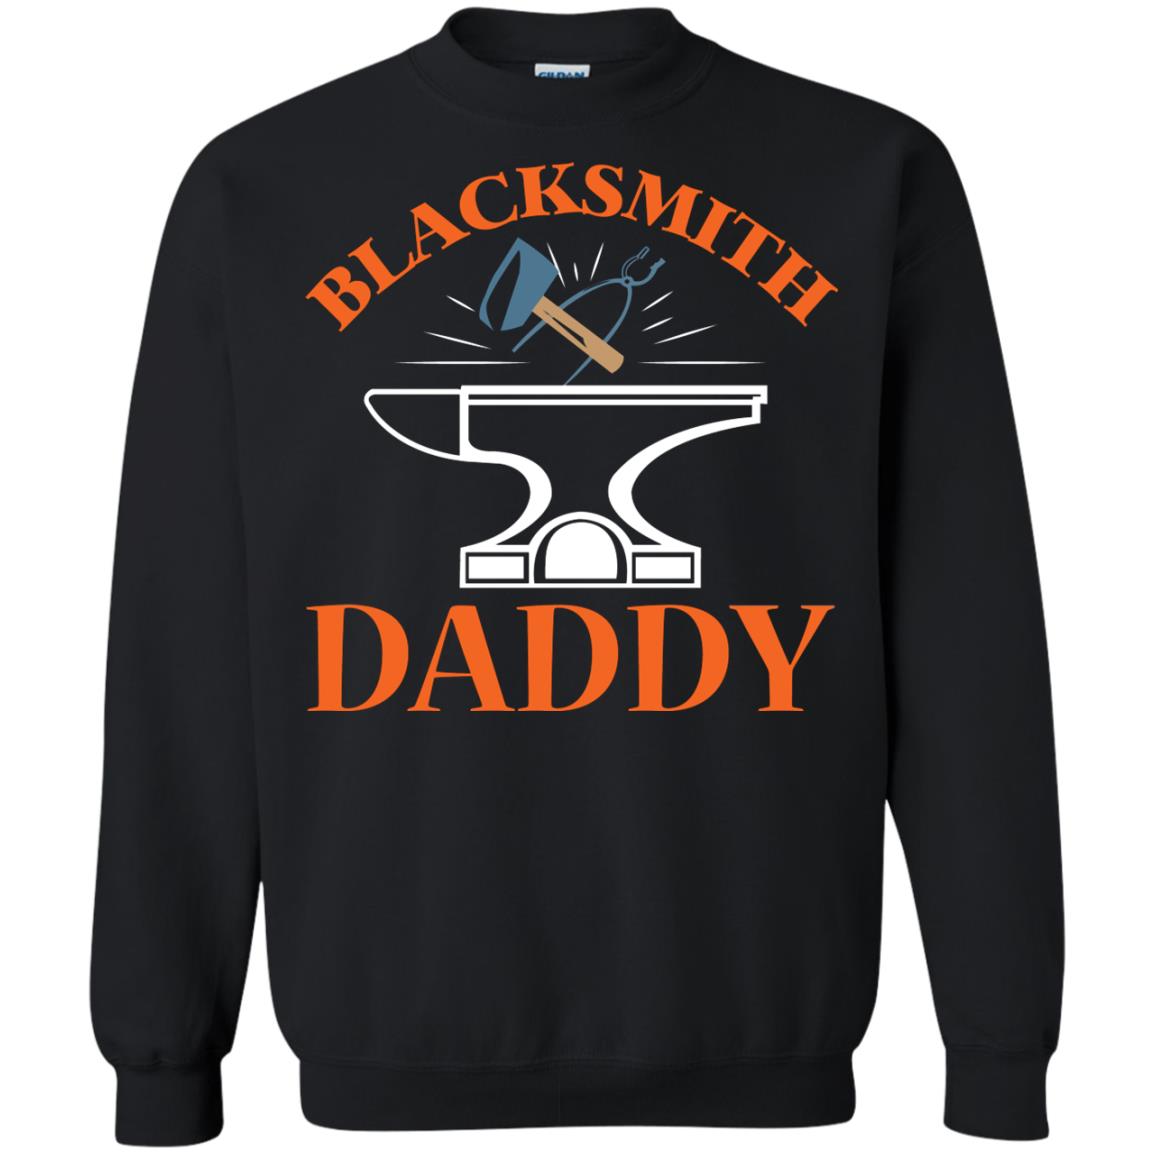 Blacksmith Daddy Happy Father's Day ShirtG180 Gildan Crewneck Pullover Sweatshirt 8 oz.